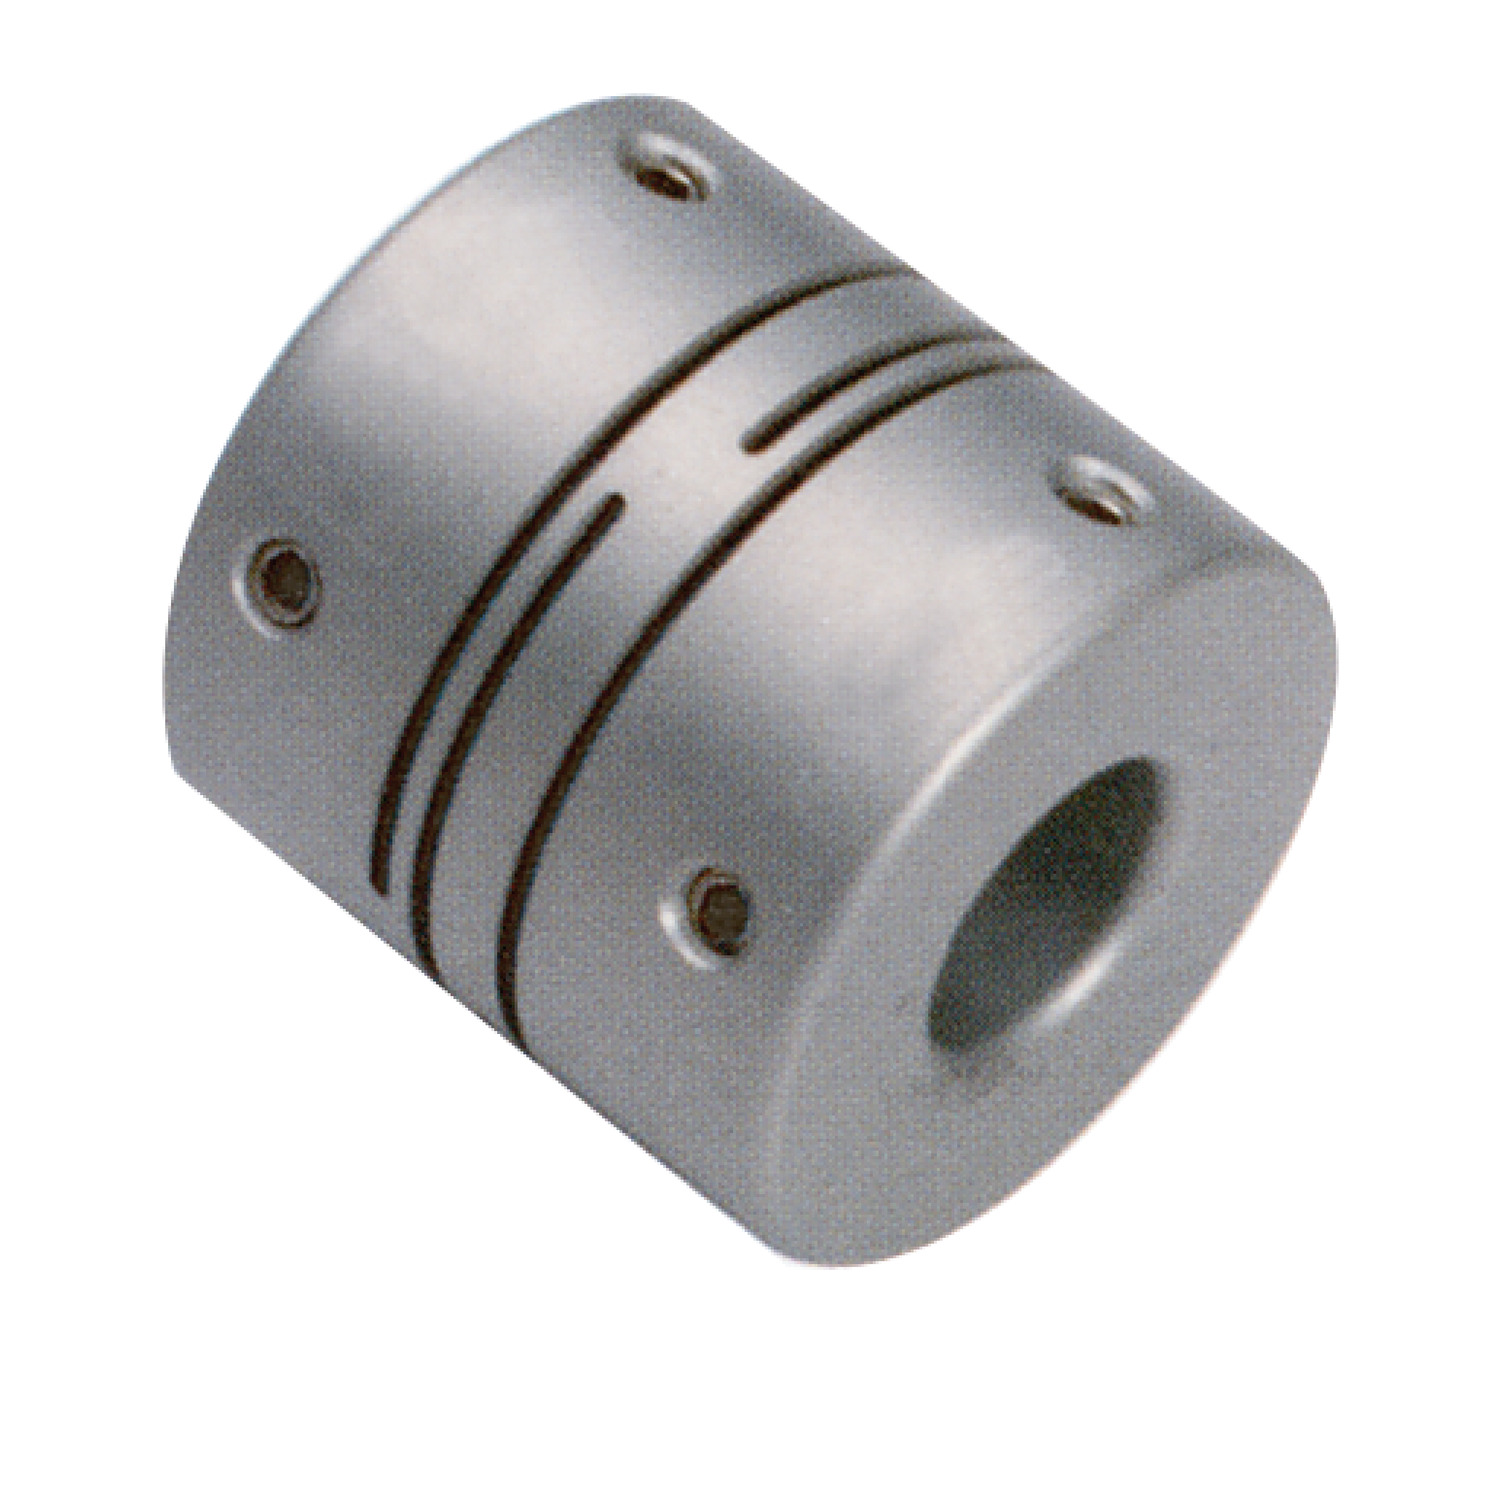 Product R3009.1, Spiral Beam Coupling - Aluminium set screw - short type / 